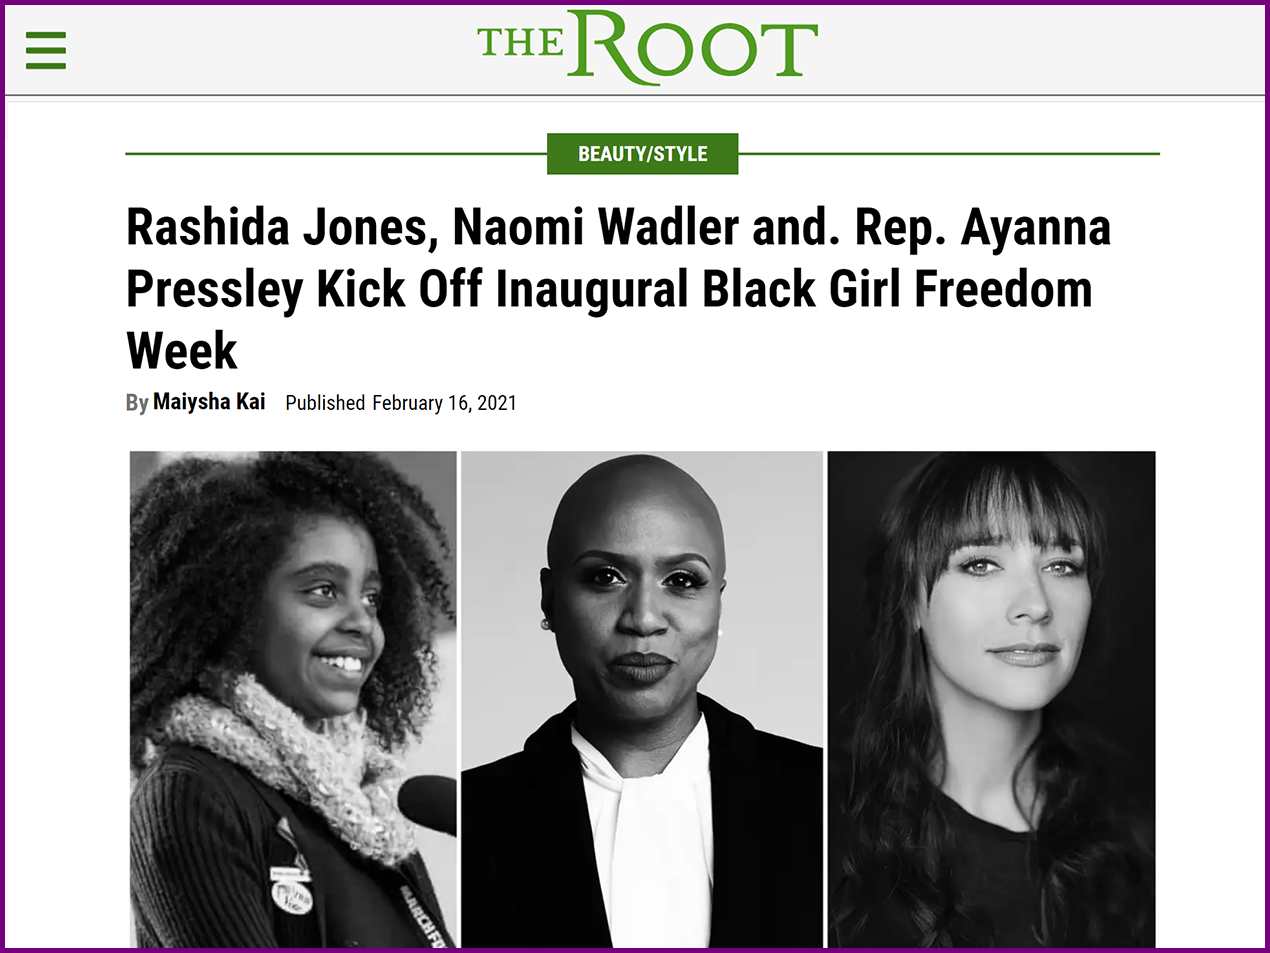 The Root feature: “Rashida Jones, Naomi Wadler and. Rep. Ayanna Pressley Kick Off Inaugural Black Girl Freedom Week”